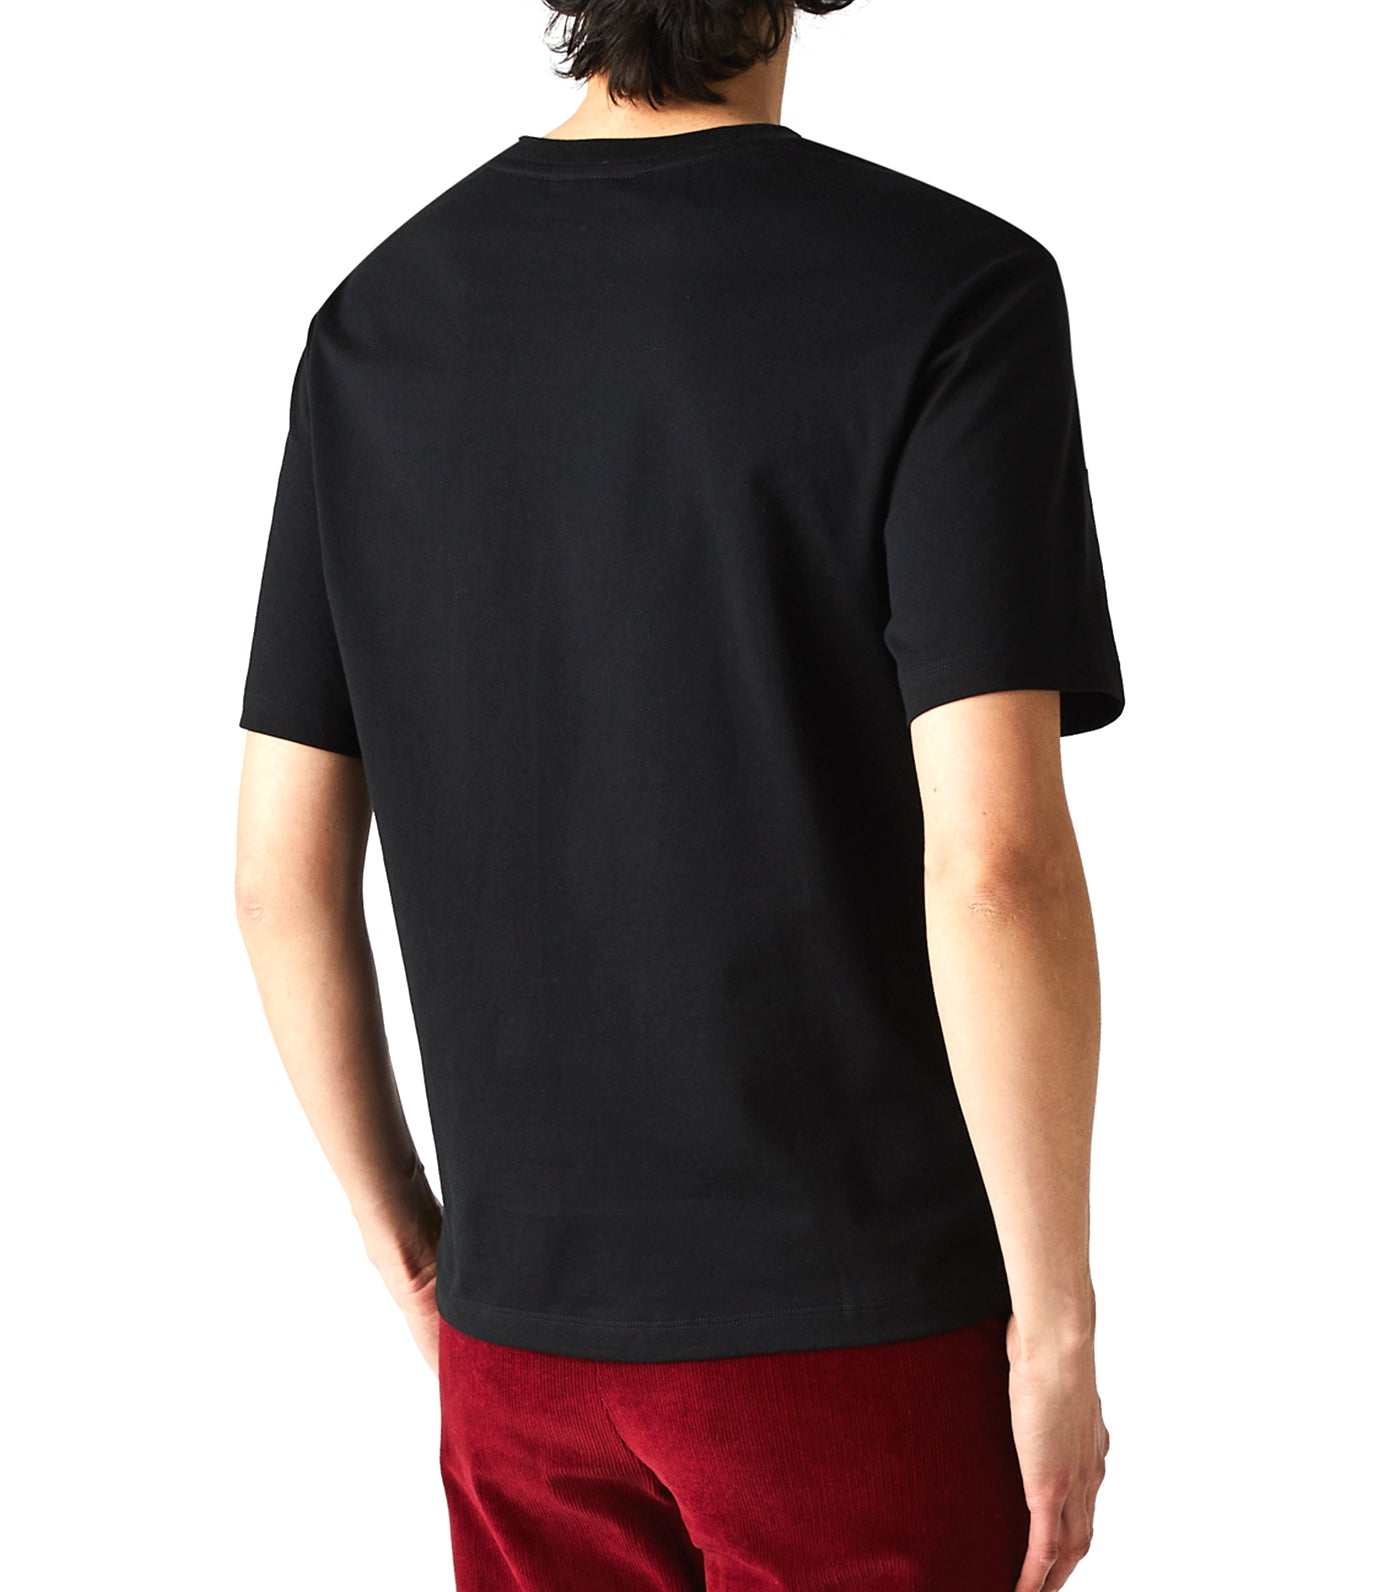 Women’s Crew Neck Premium Cotton T-shirt Black